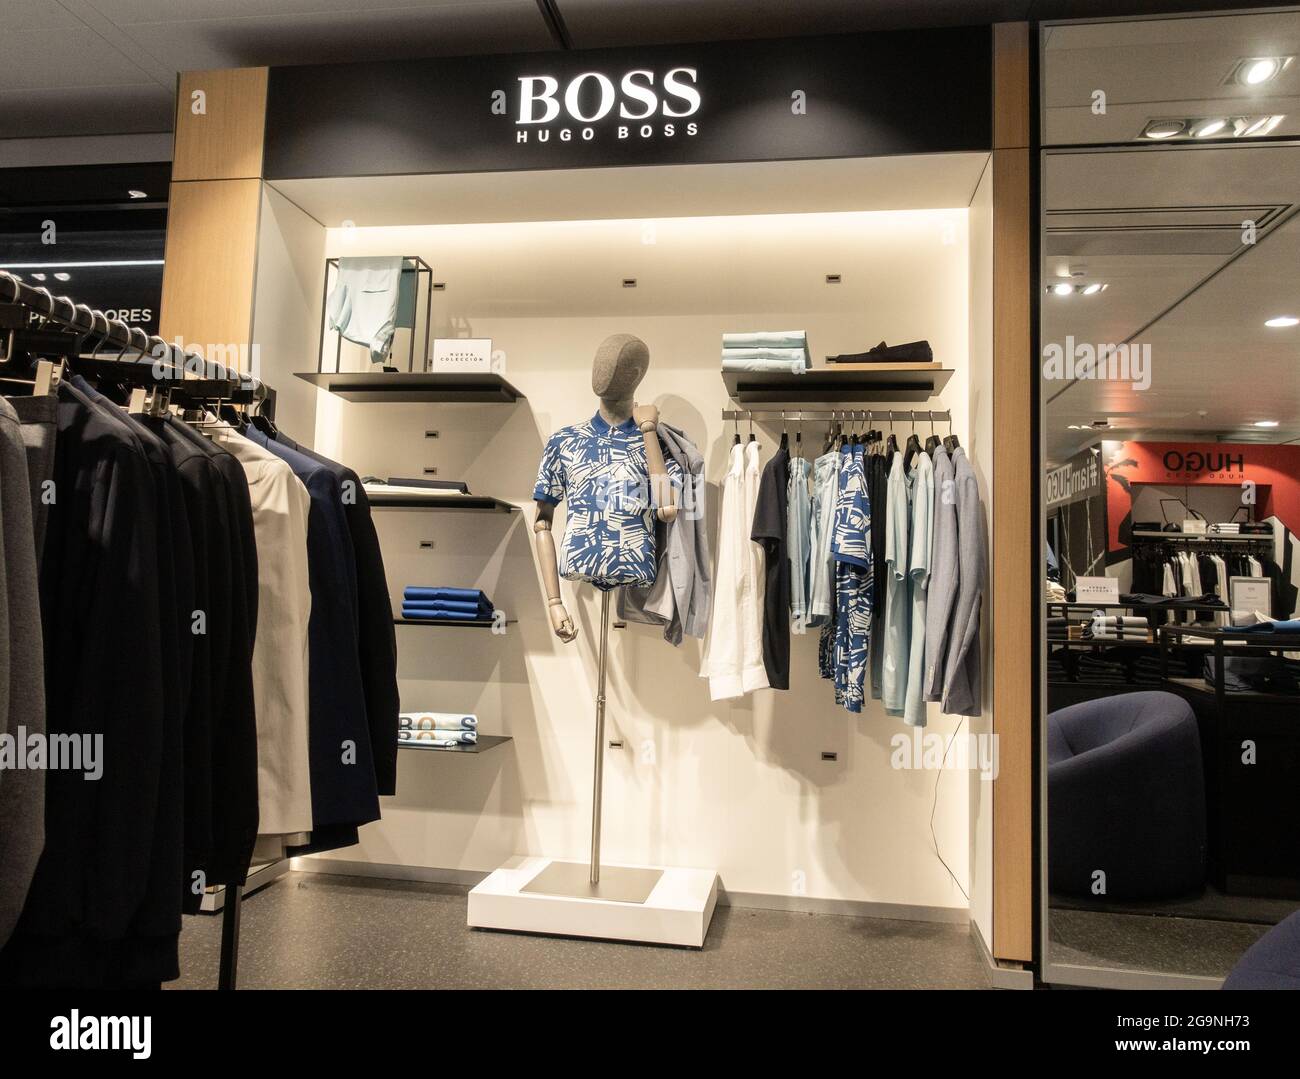 Hugo Boss clothing store display Stock Photo - Alamy